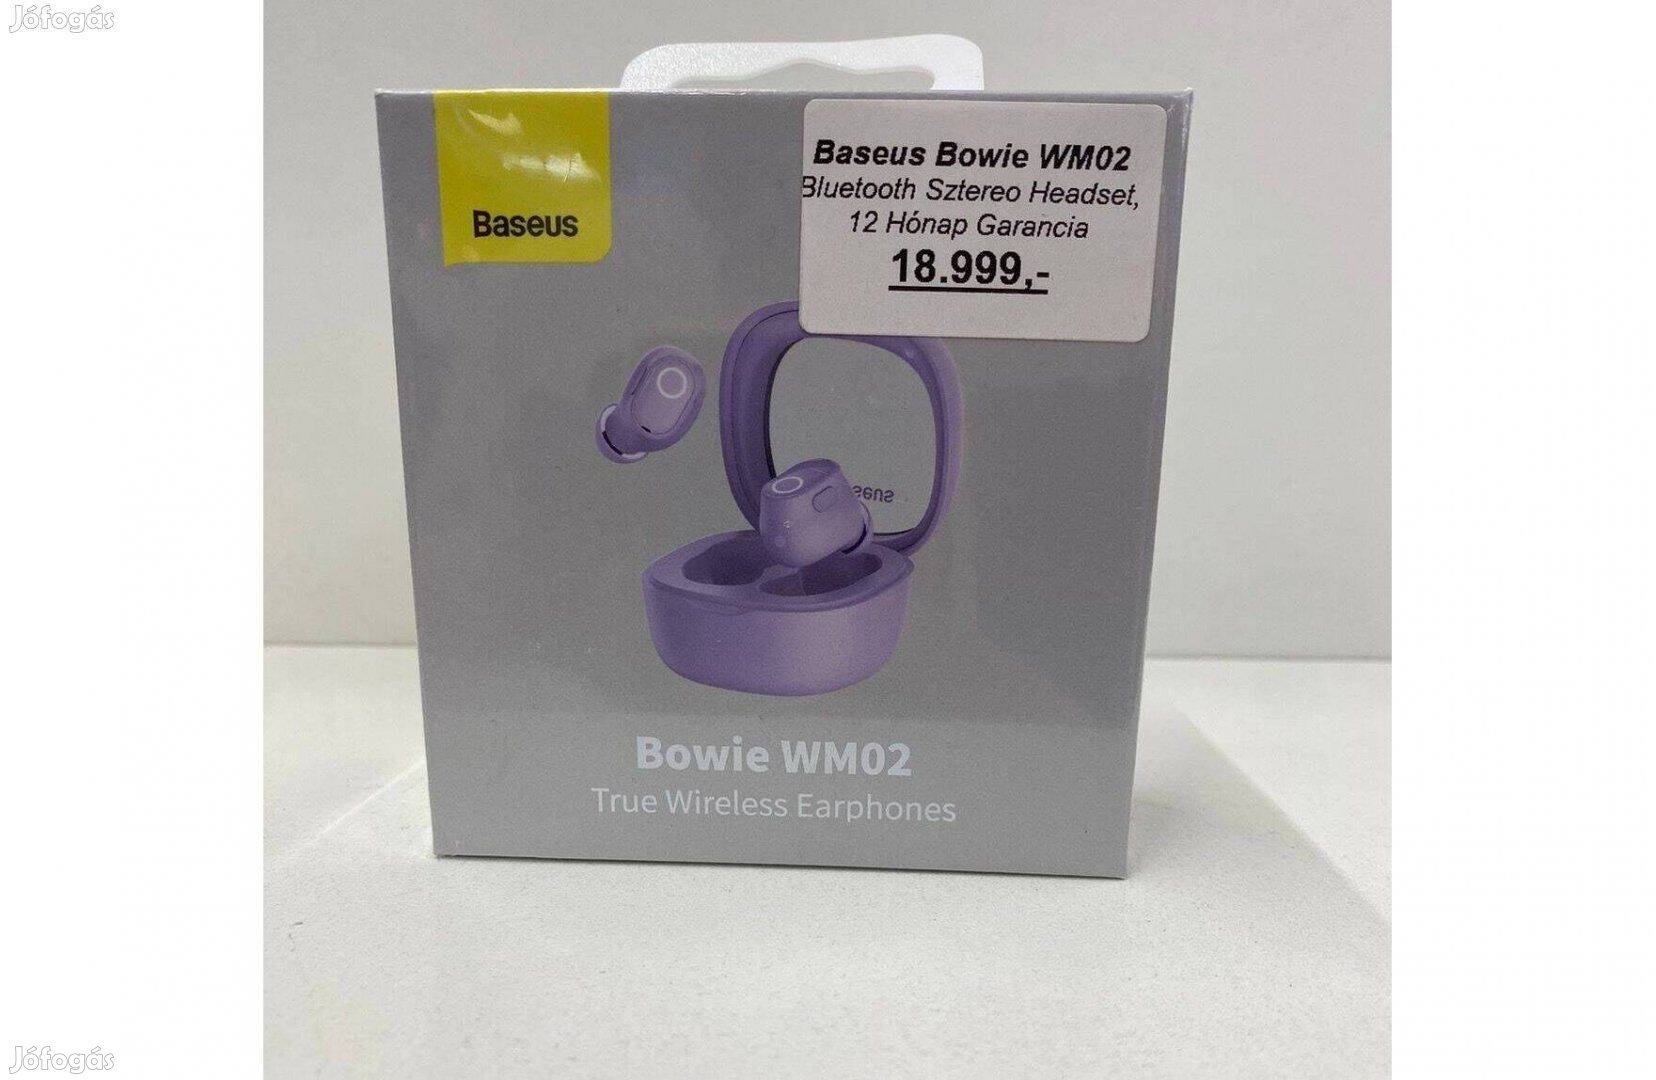 Baseus Bowie WM02 Bluetooth Sztereo Headset